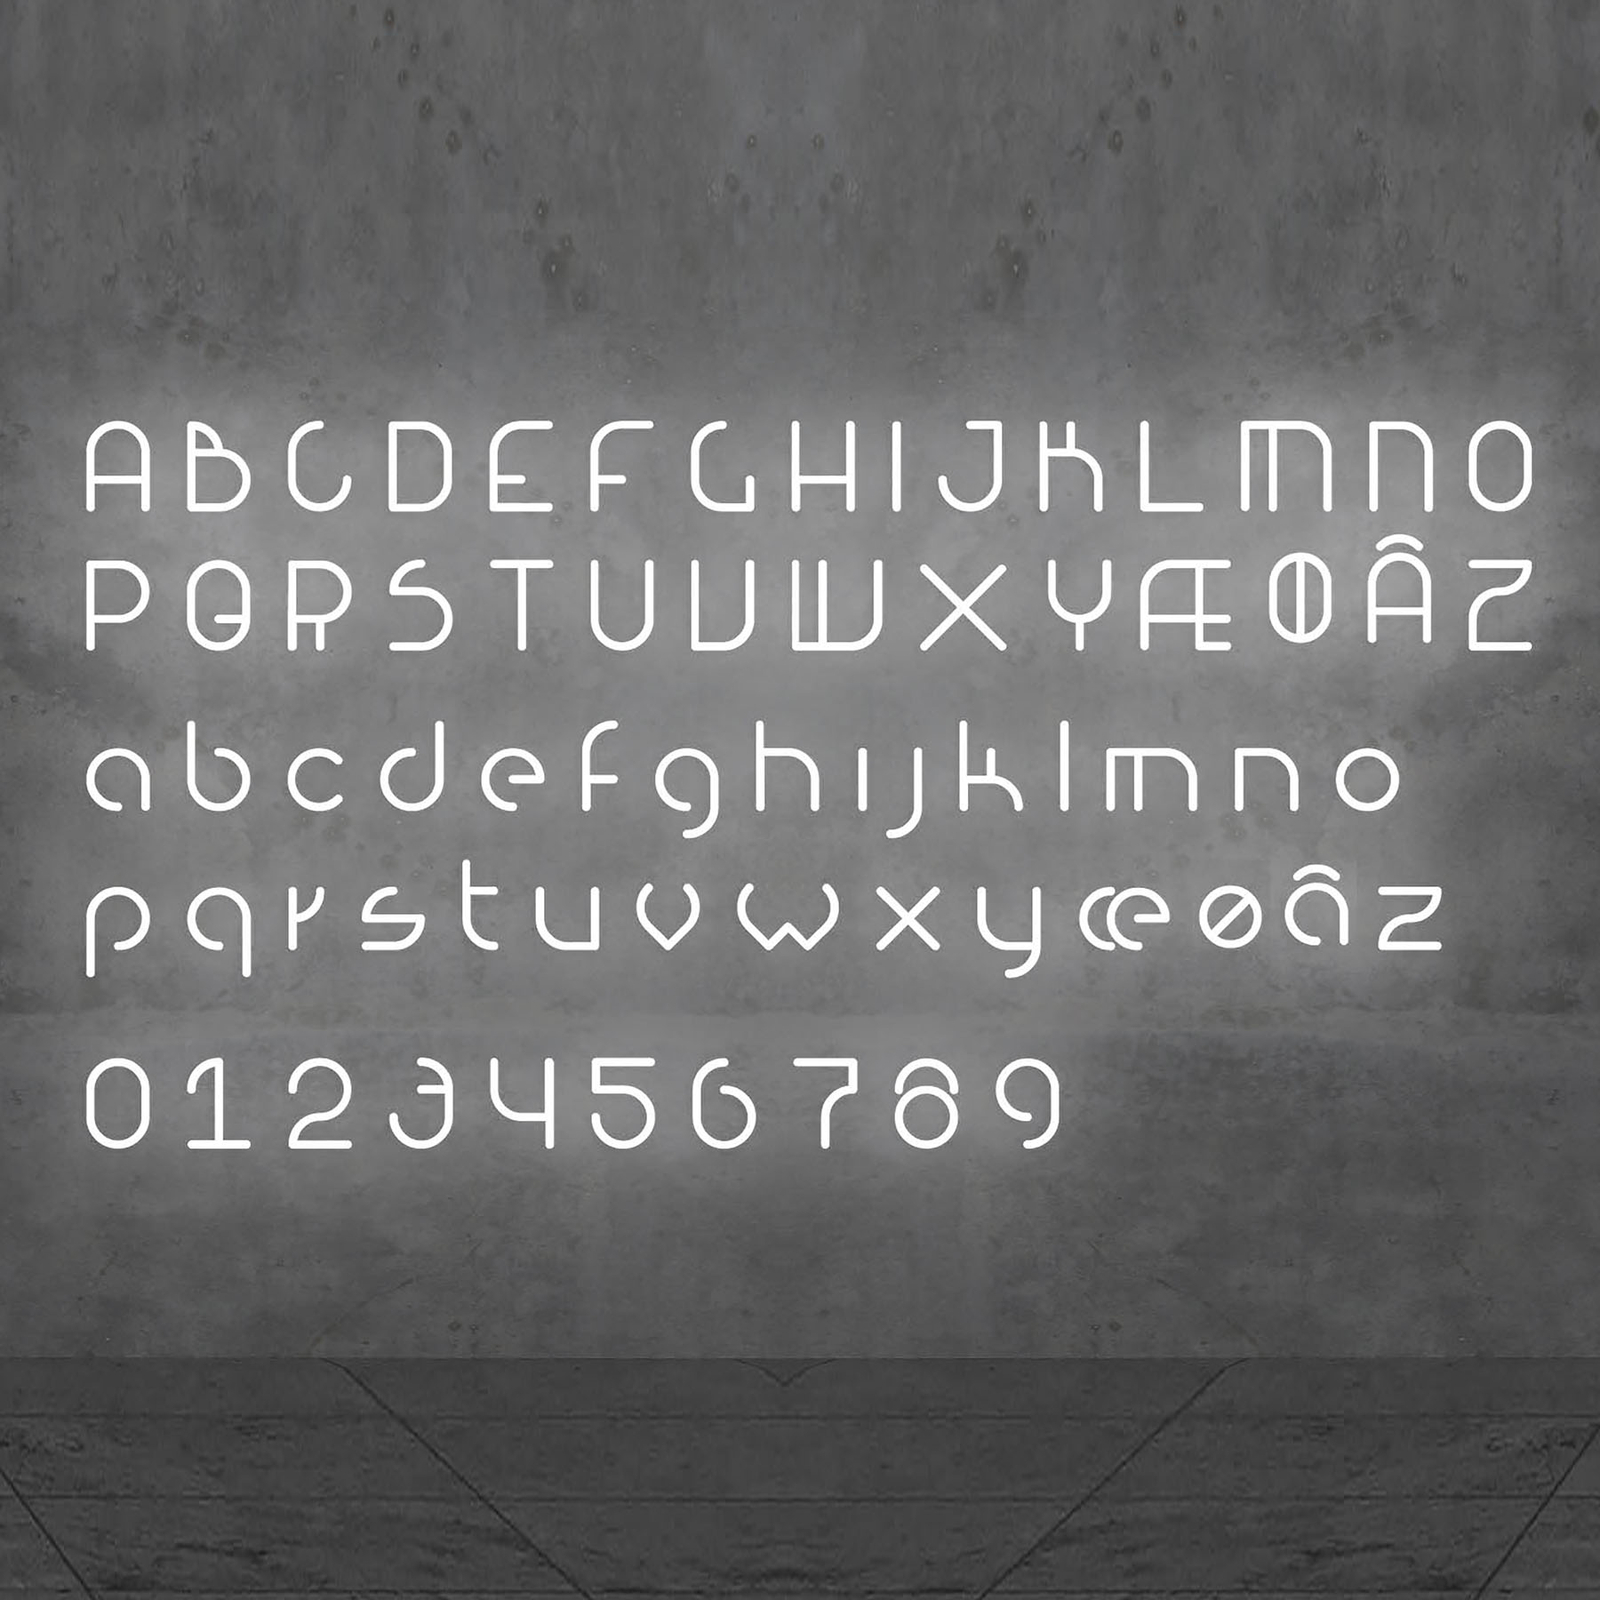 Artemide Alphabet of Light væg, stort bogstav P